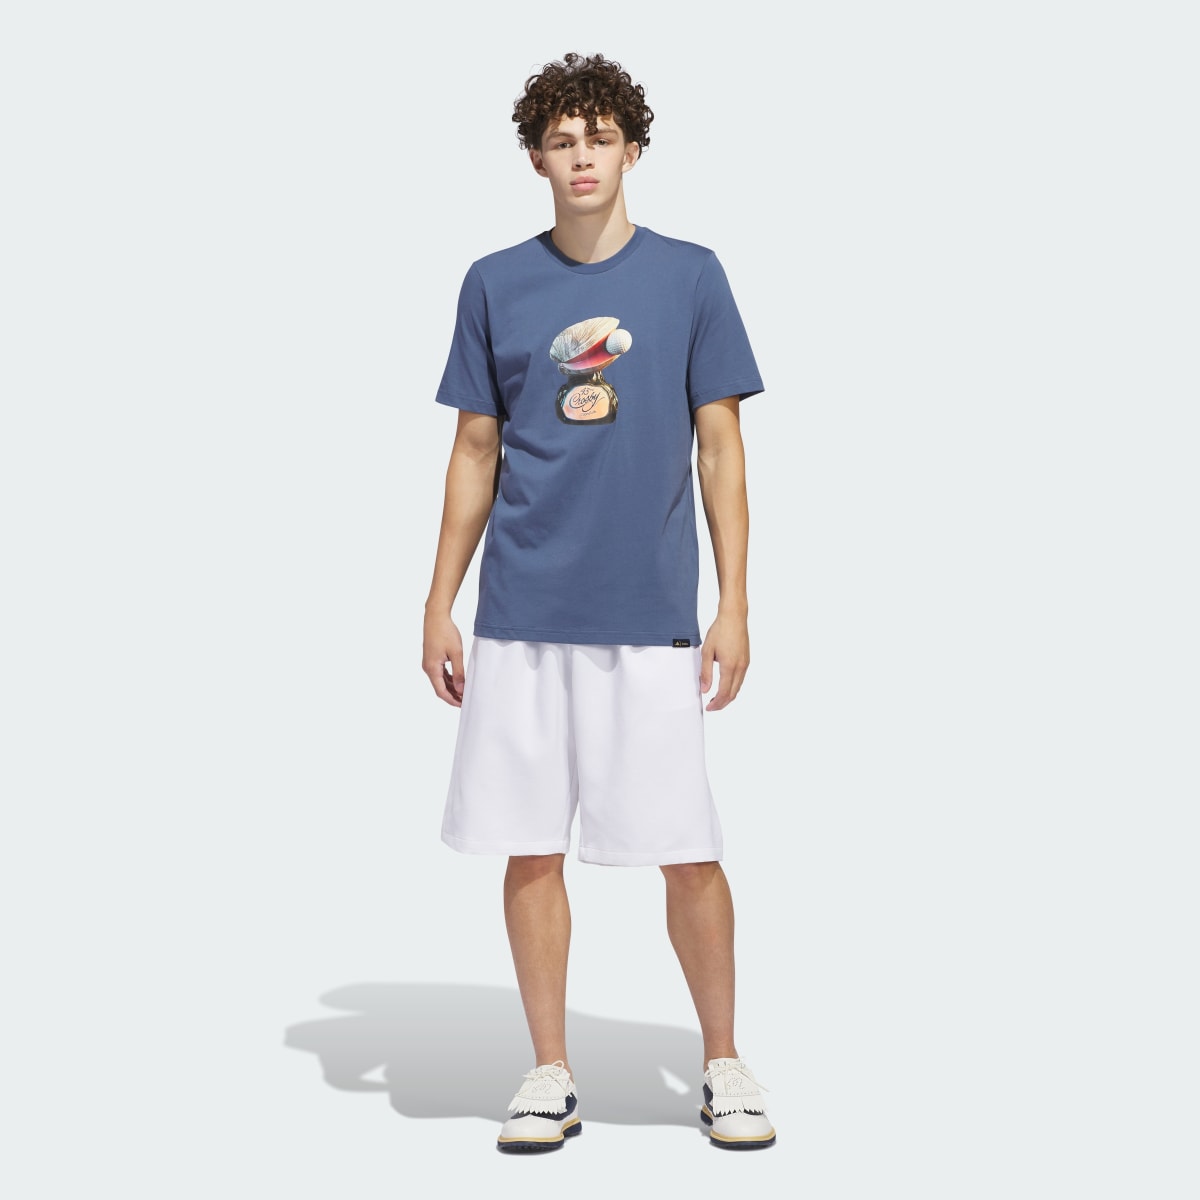 Adidas x Malbon Graphic T-Shirt. 6